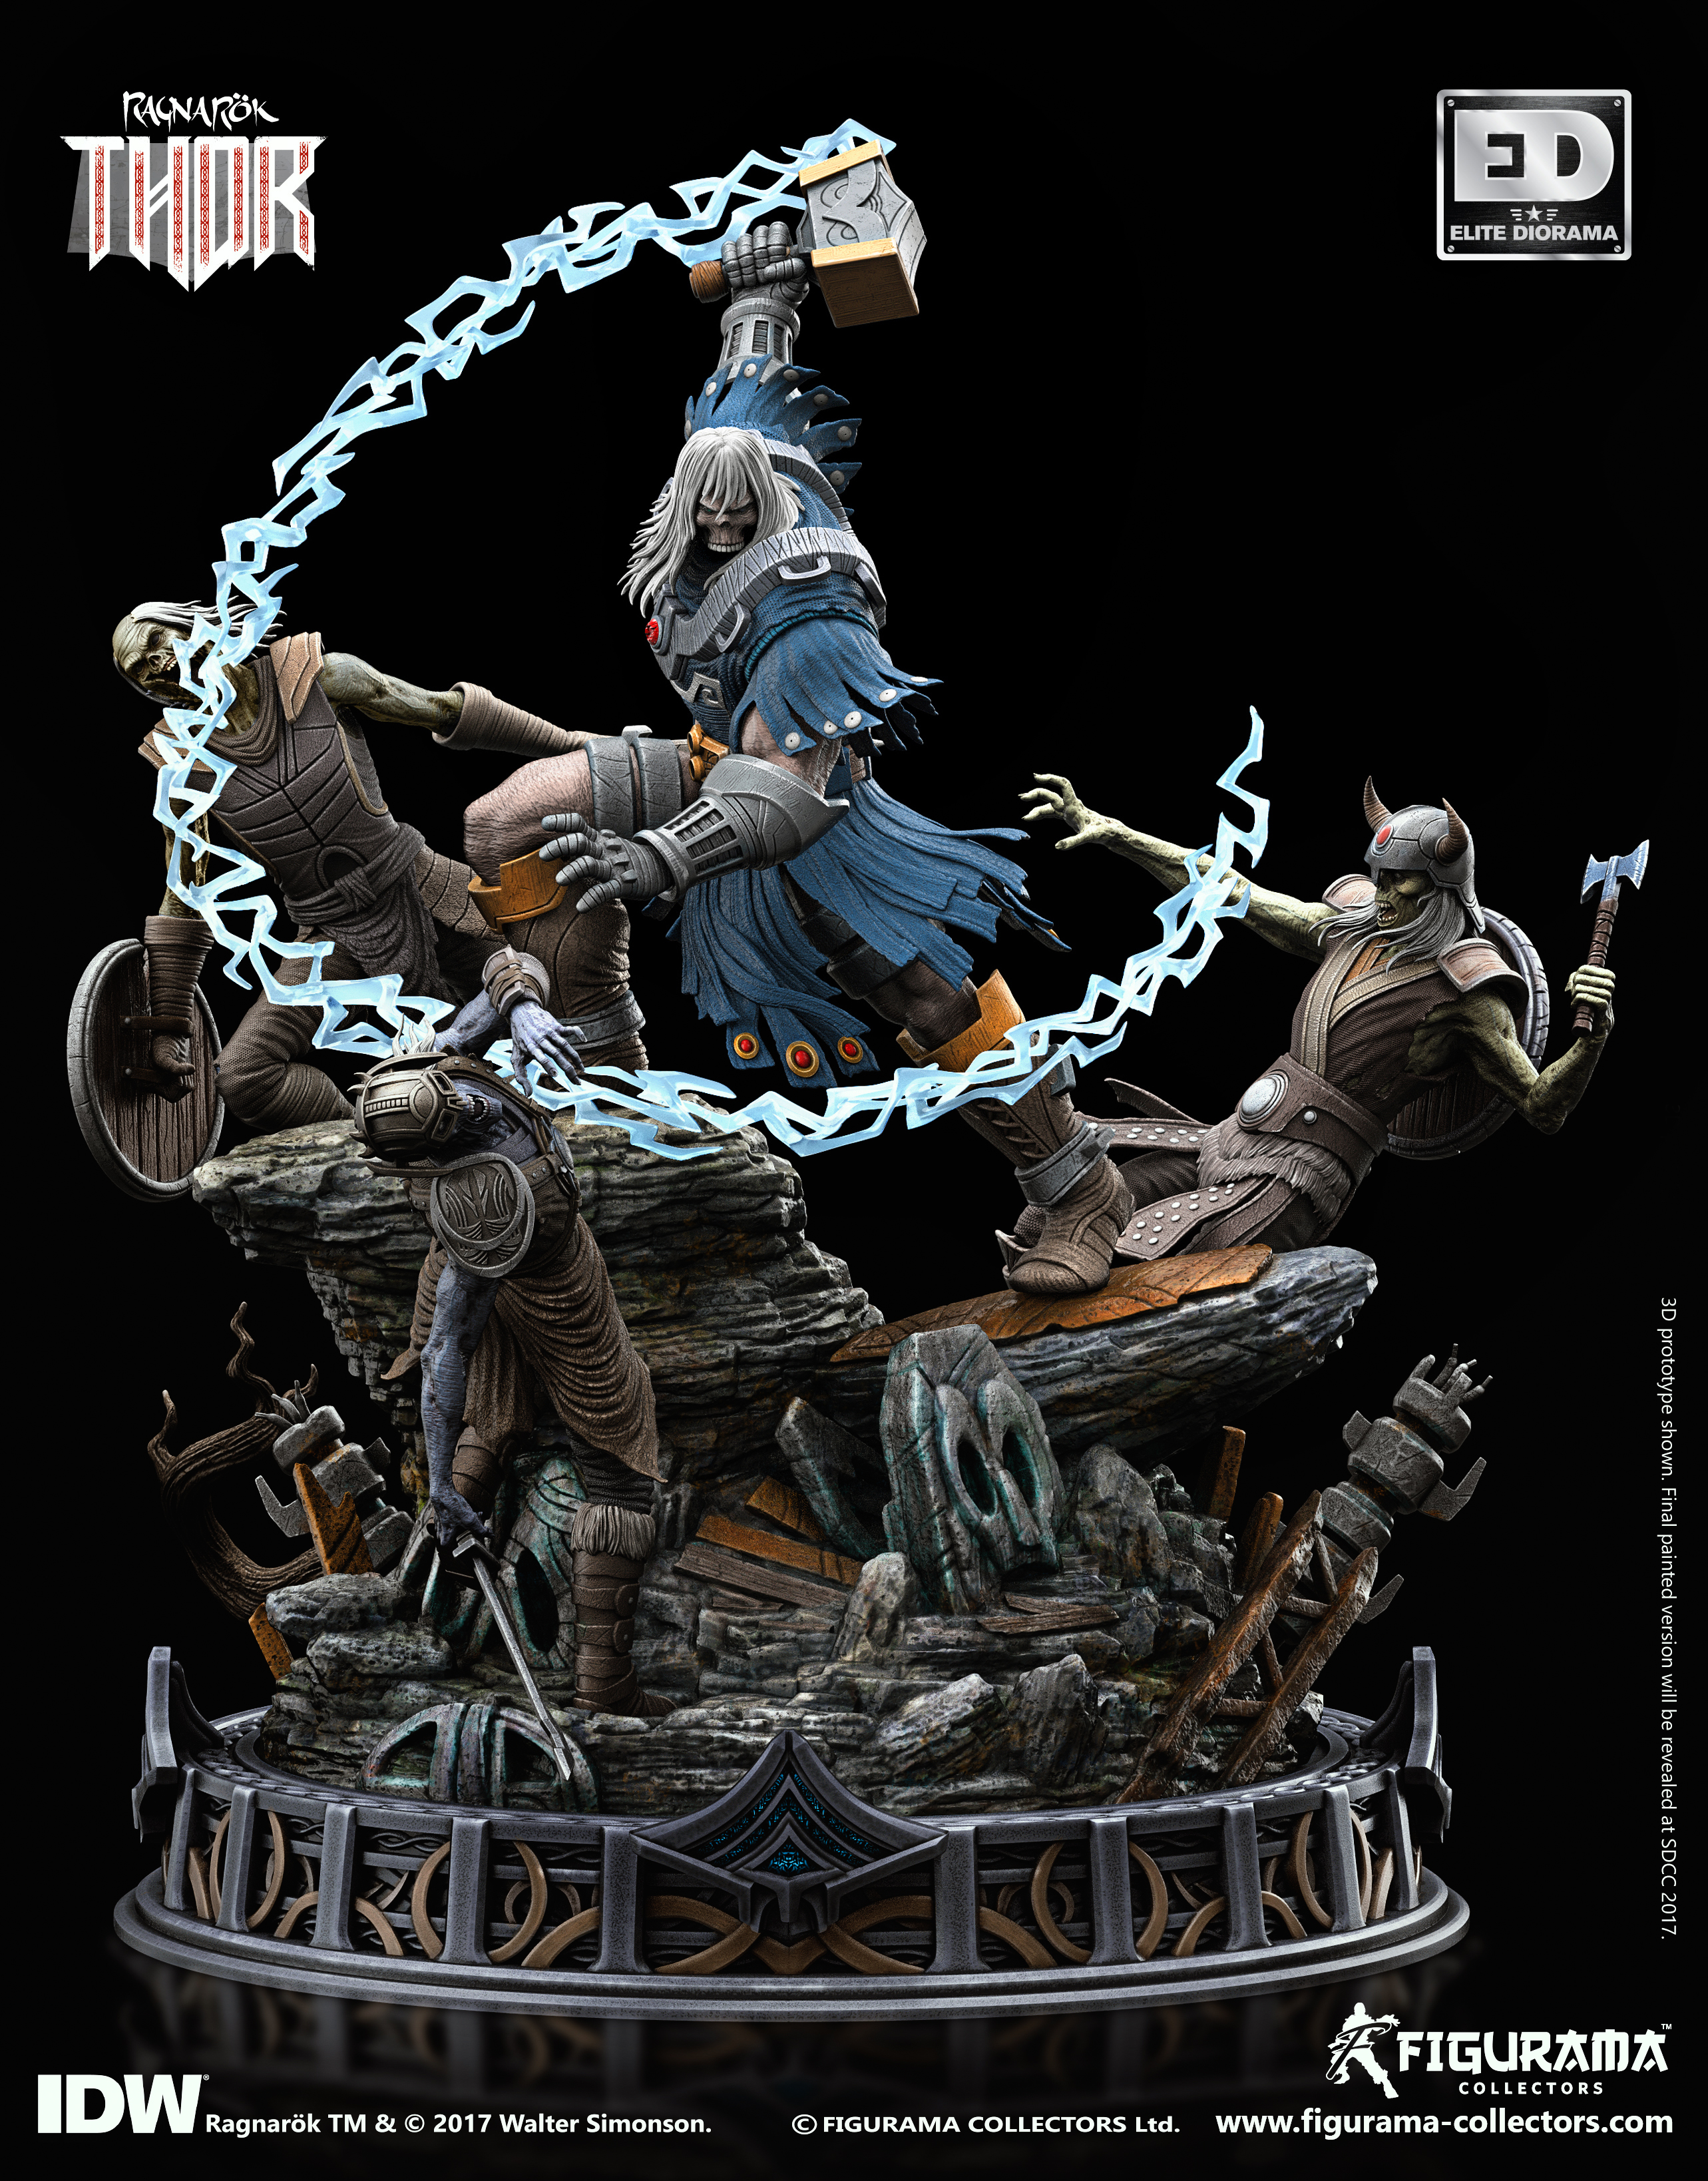 Ragnarök Thor 18" Elite Diorama Statue 